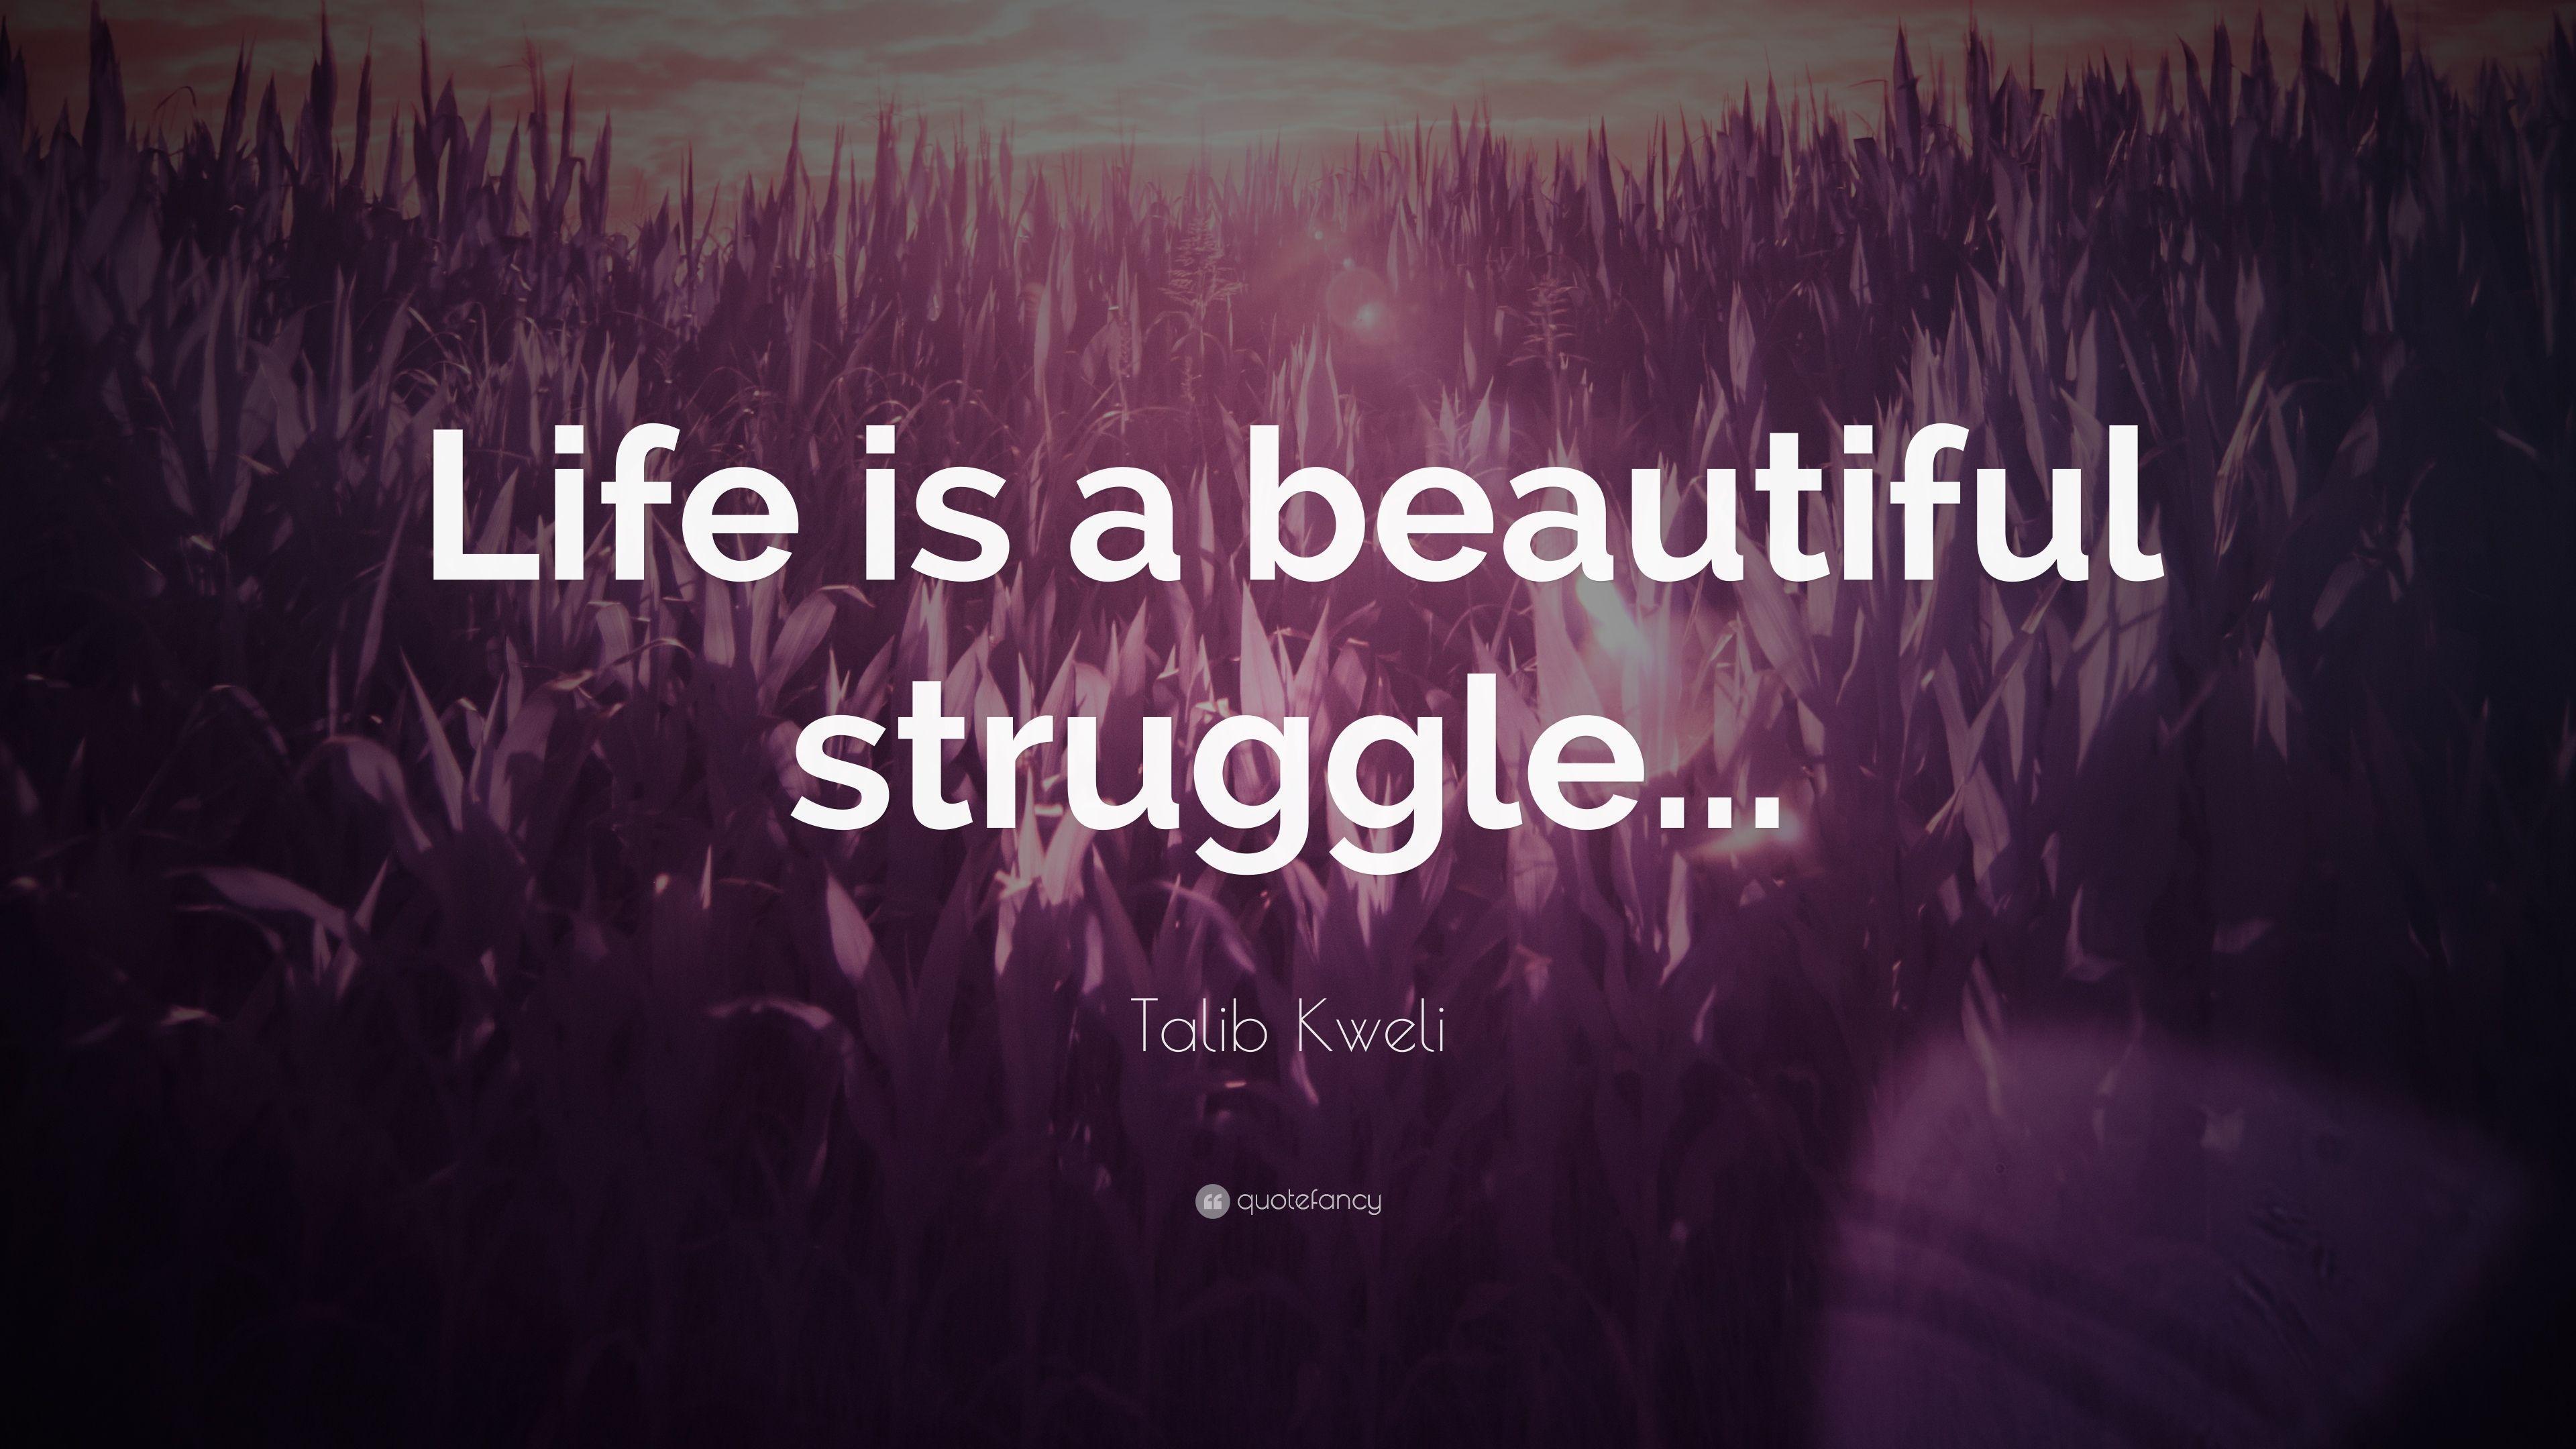 Talib Kweli Quote: “Life is a beautiful struggle.” 7 wallpaper